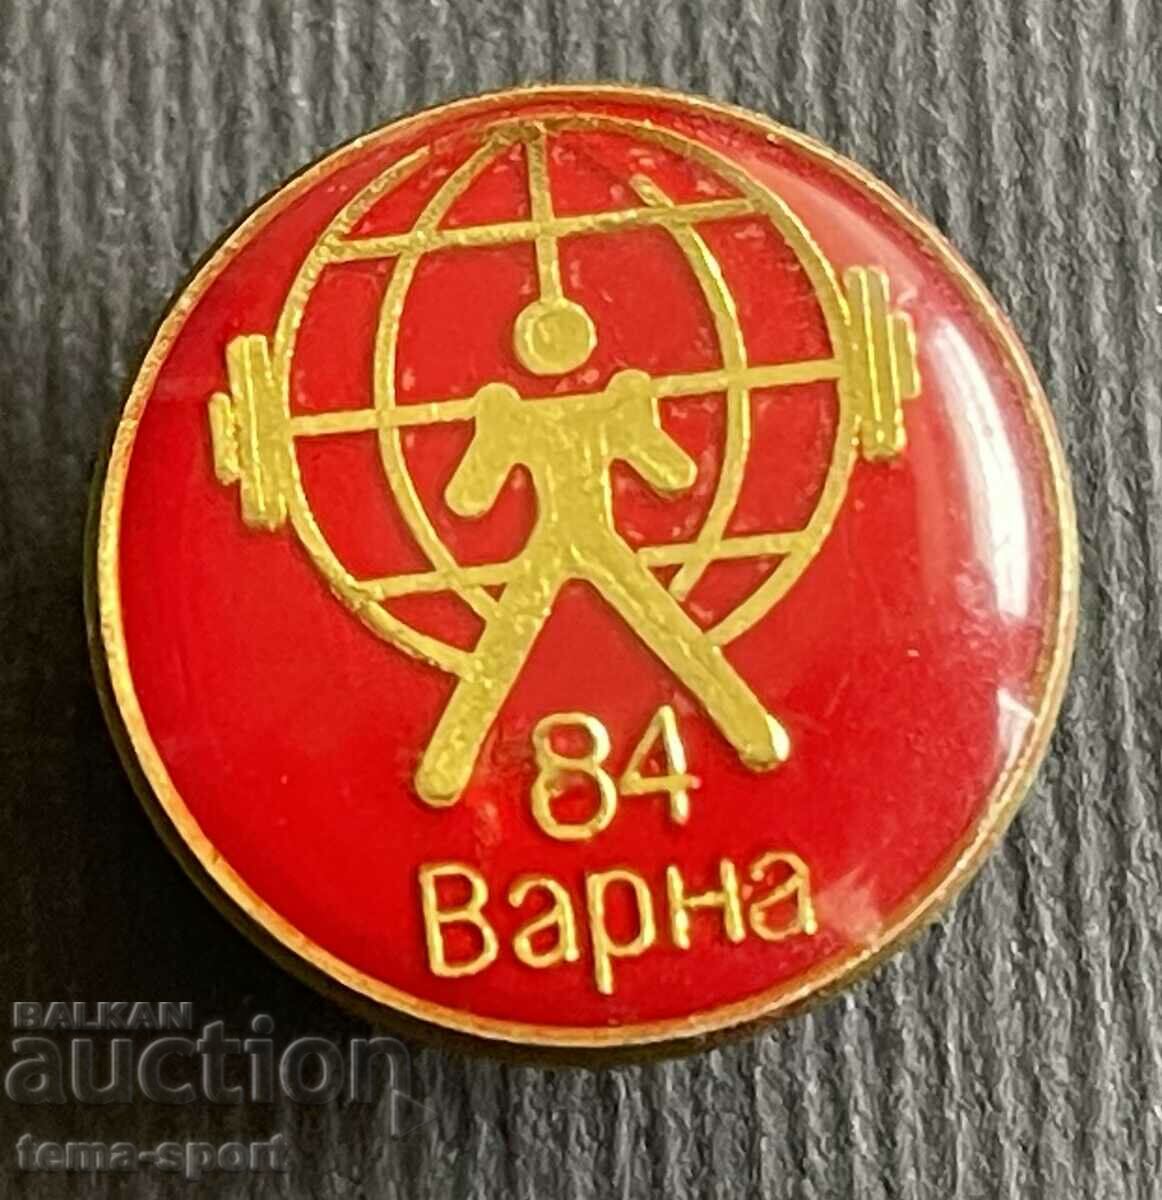 352 Bulgaria European Barbell Weightlifting Championship